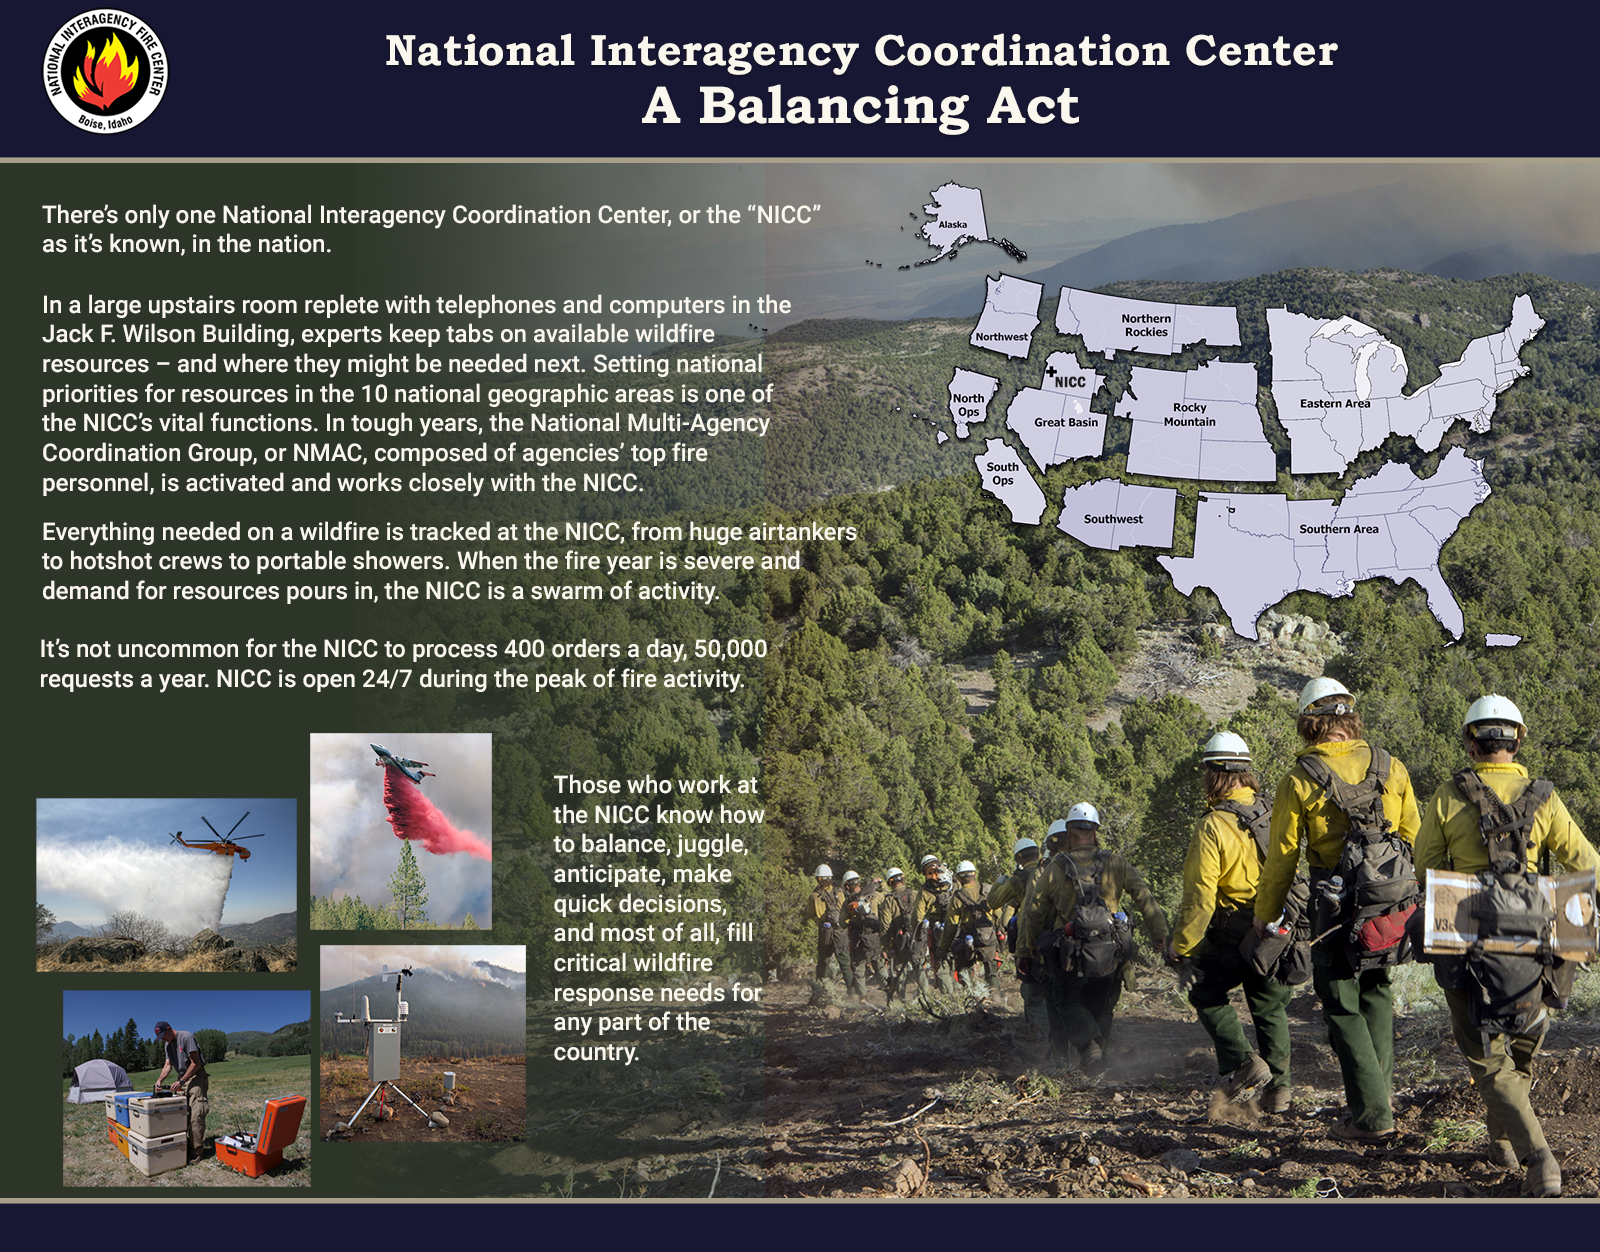 Interpretive Sign titled "National Interagency Coordination Center: A Balancing Act"